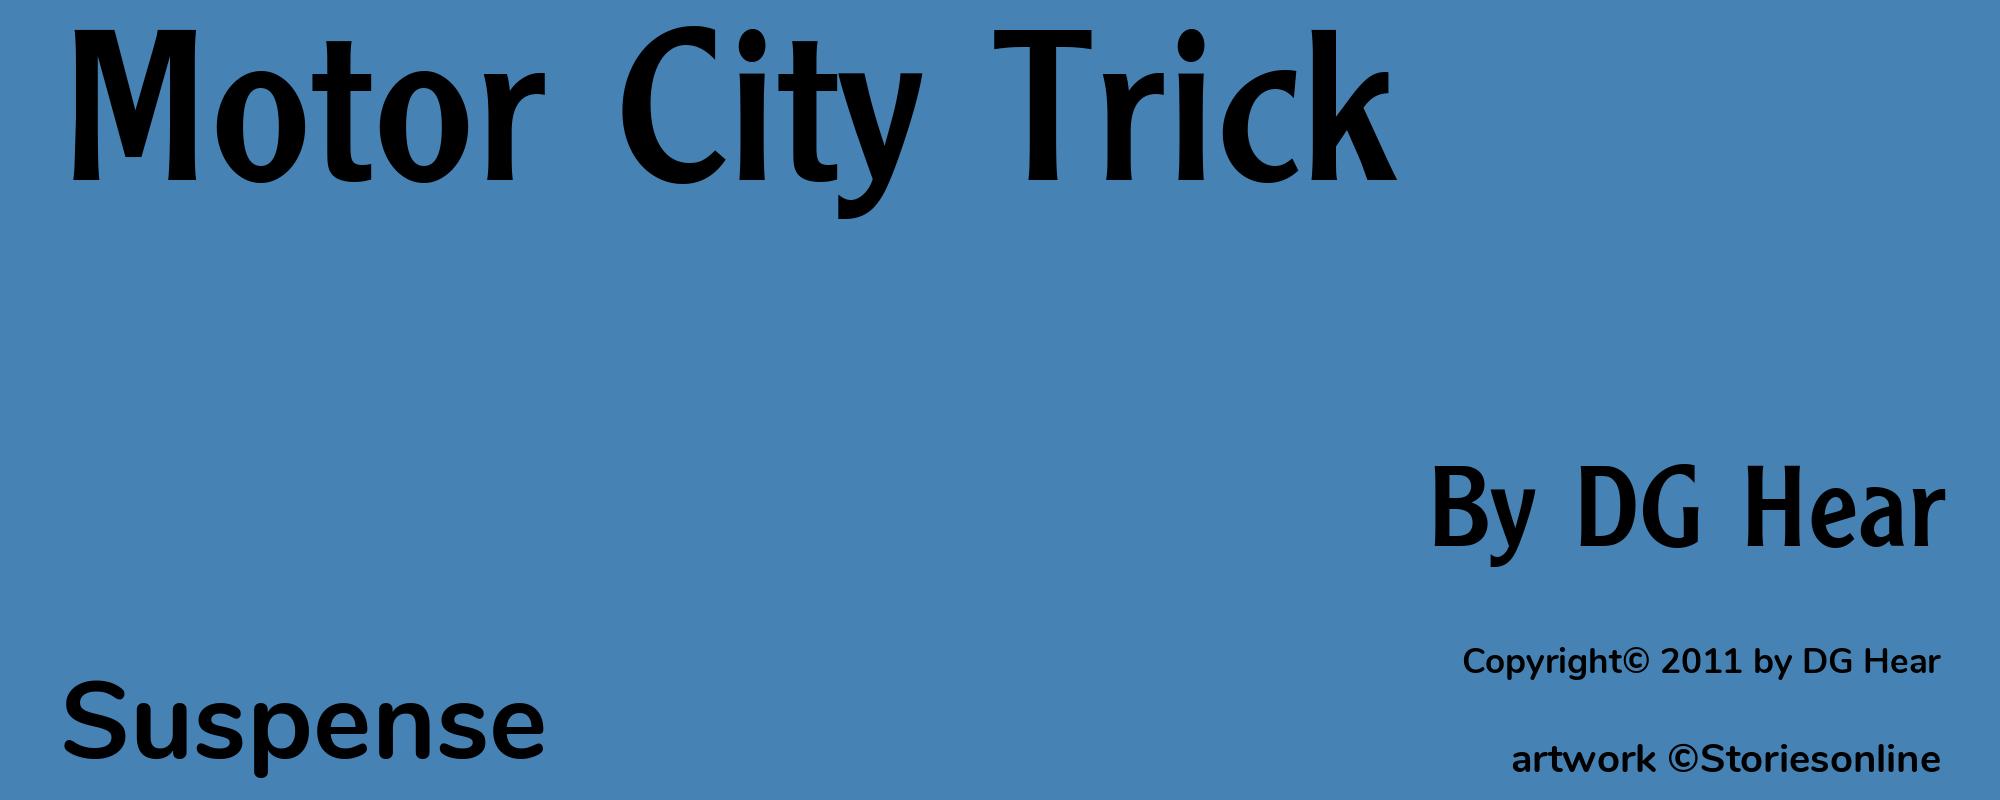 Motor City Trick - Cover